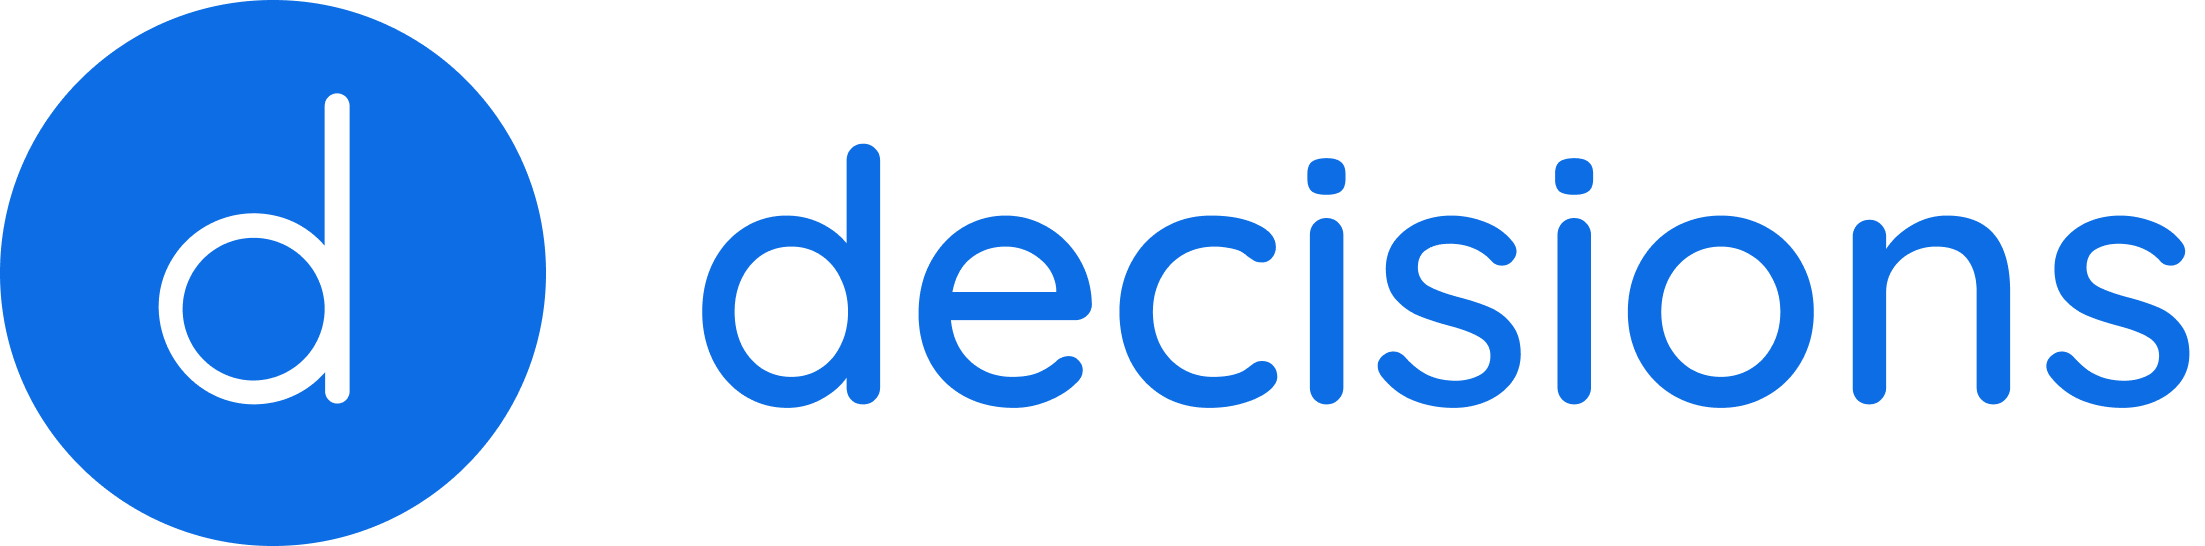 decisions-logo-full-blue